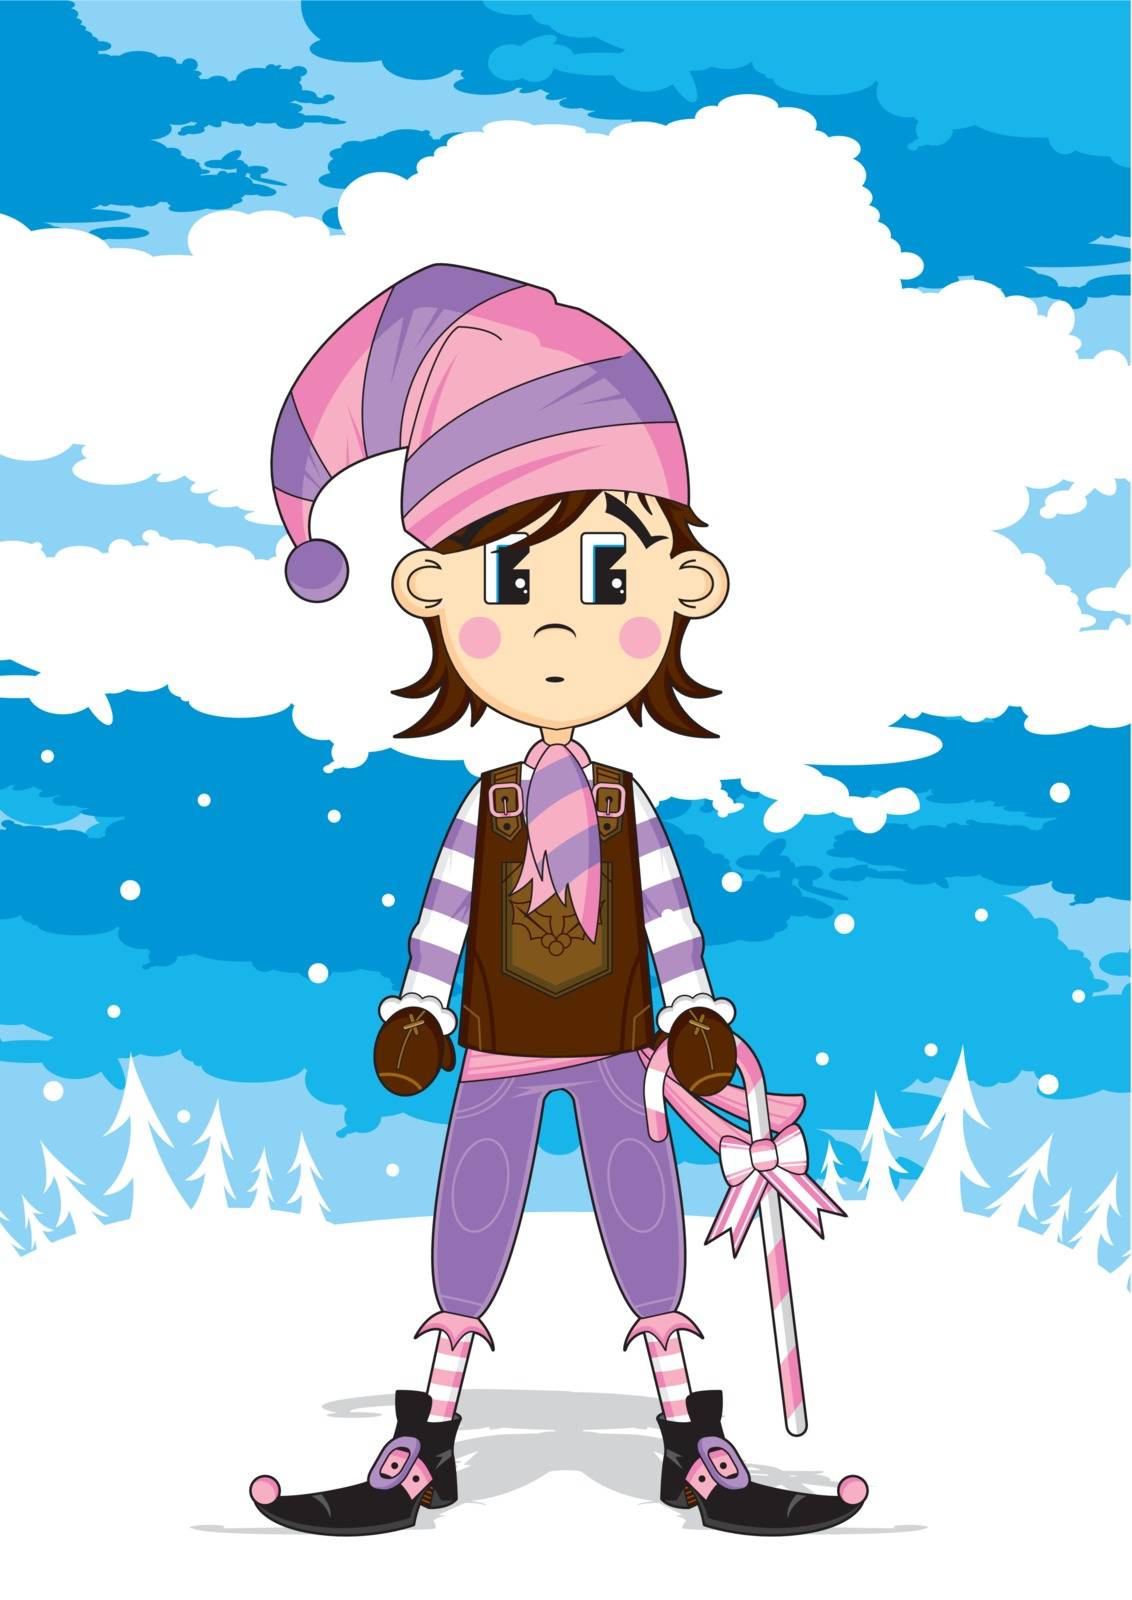 Adorably Cute Cartoon Christmas Elf with Candy Cane Vector Illustration by Mark Murphy Creative